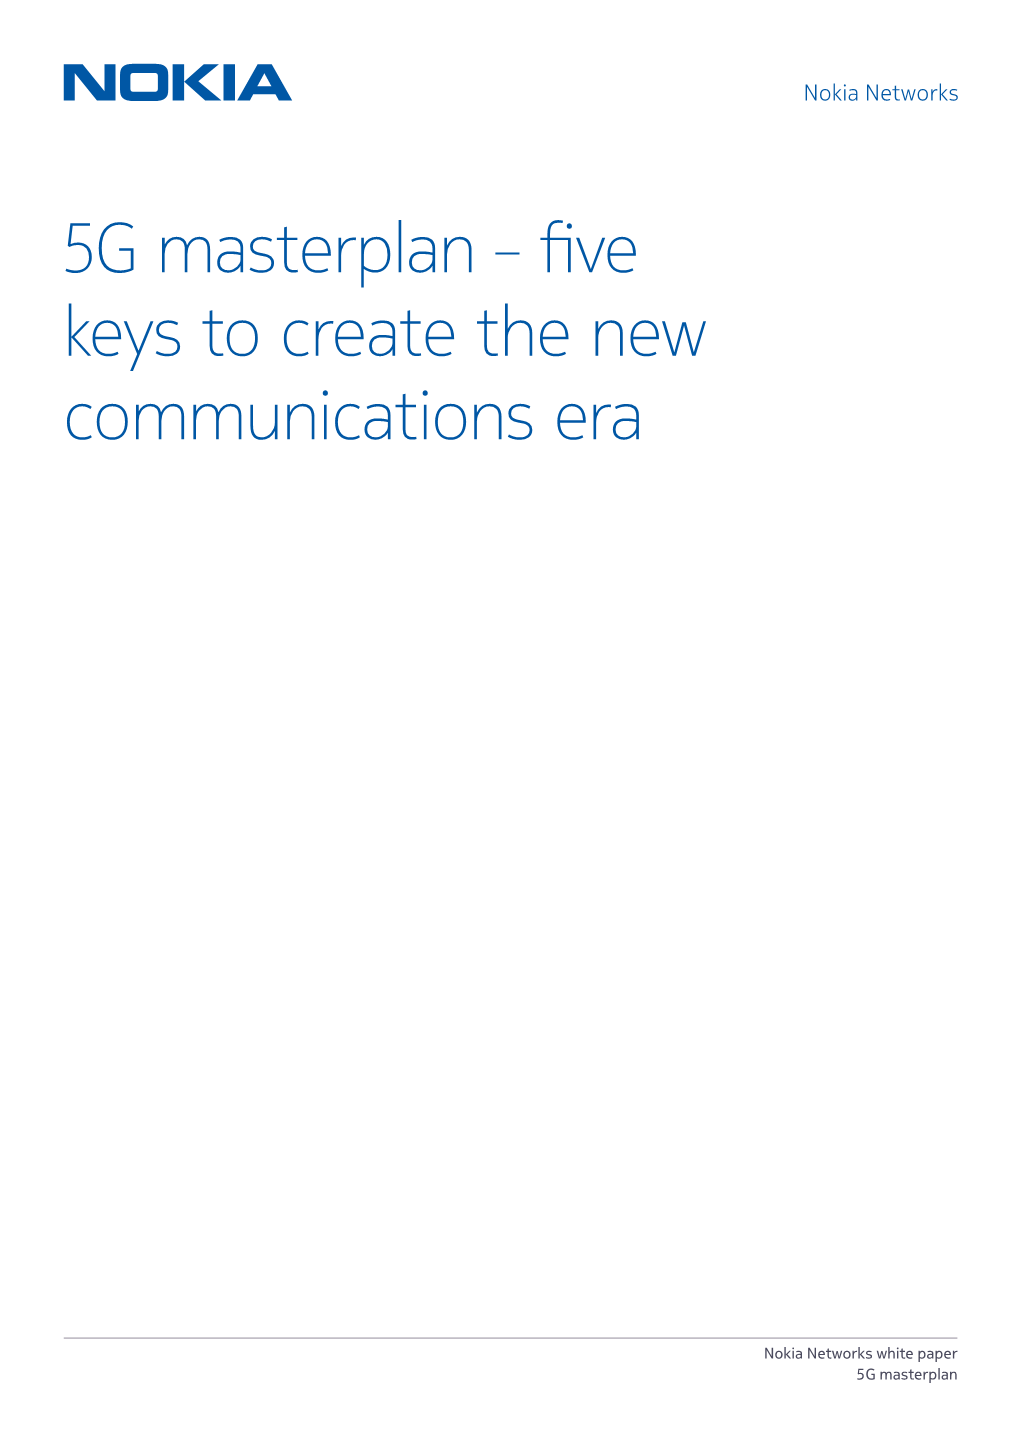 5G Masterplan – Five Keys to Create the New Communications Era